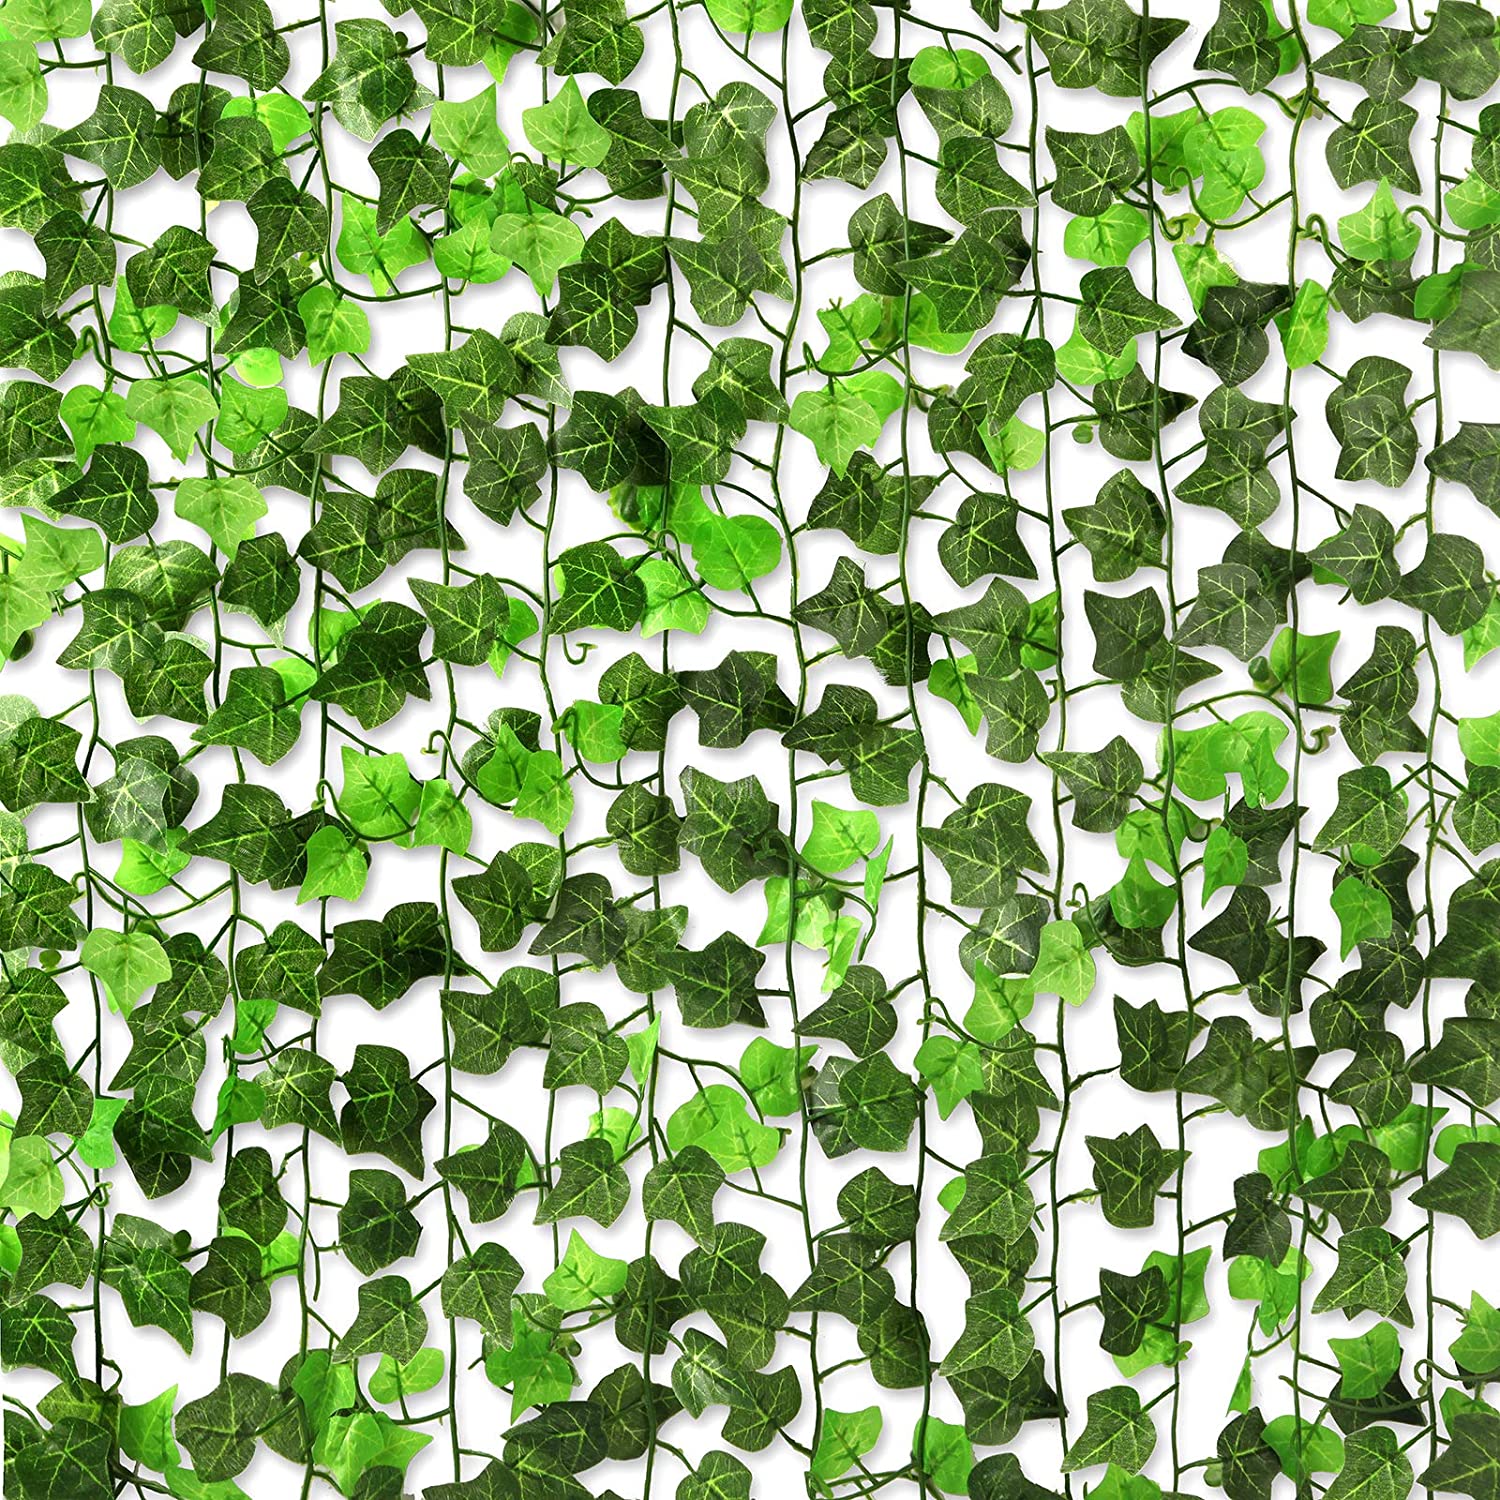 12 Piece Set Artificial Ivy Leaves Vines Foliage Garland, Faux